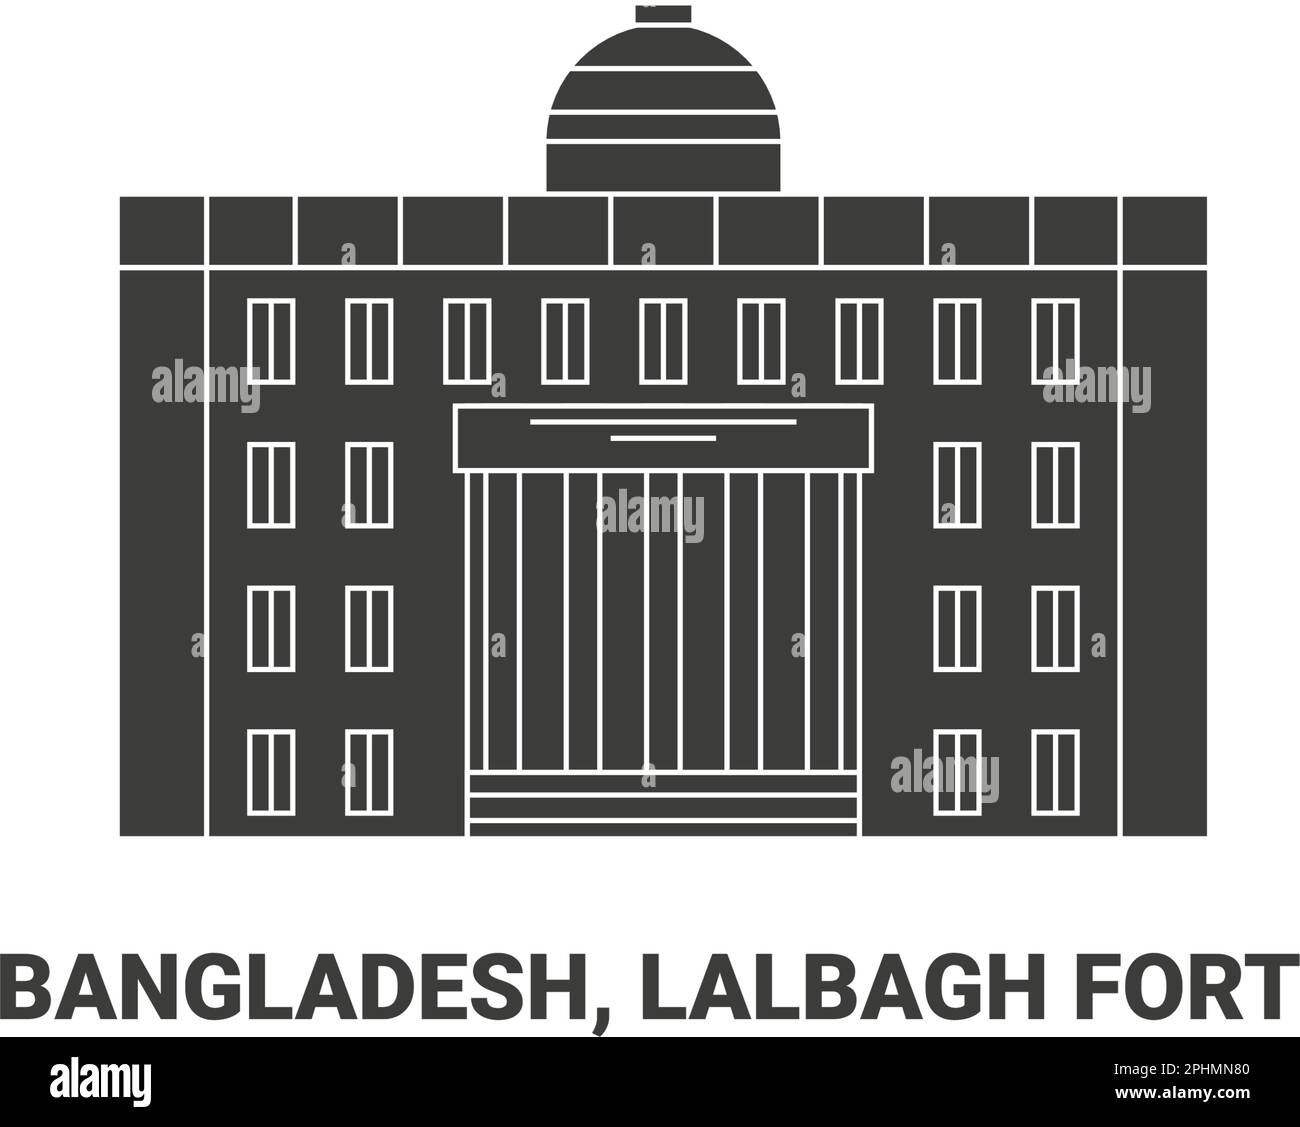 Bangladesh, Lalbagh Fort, travel landmark vector illustration Stock Vector